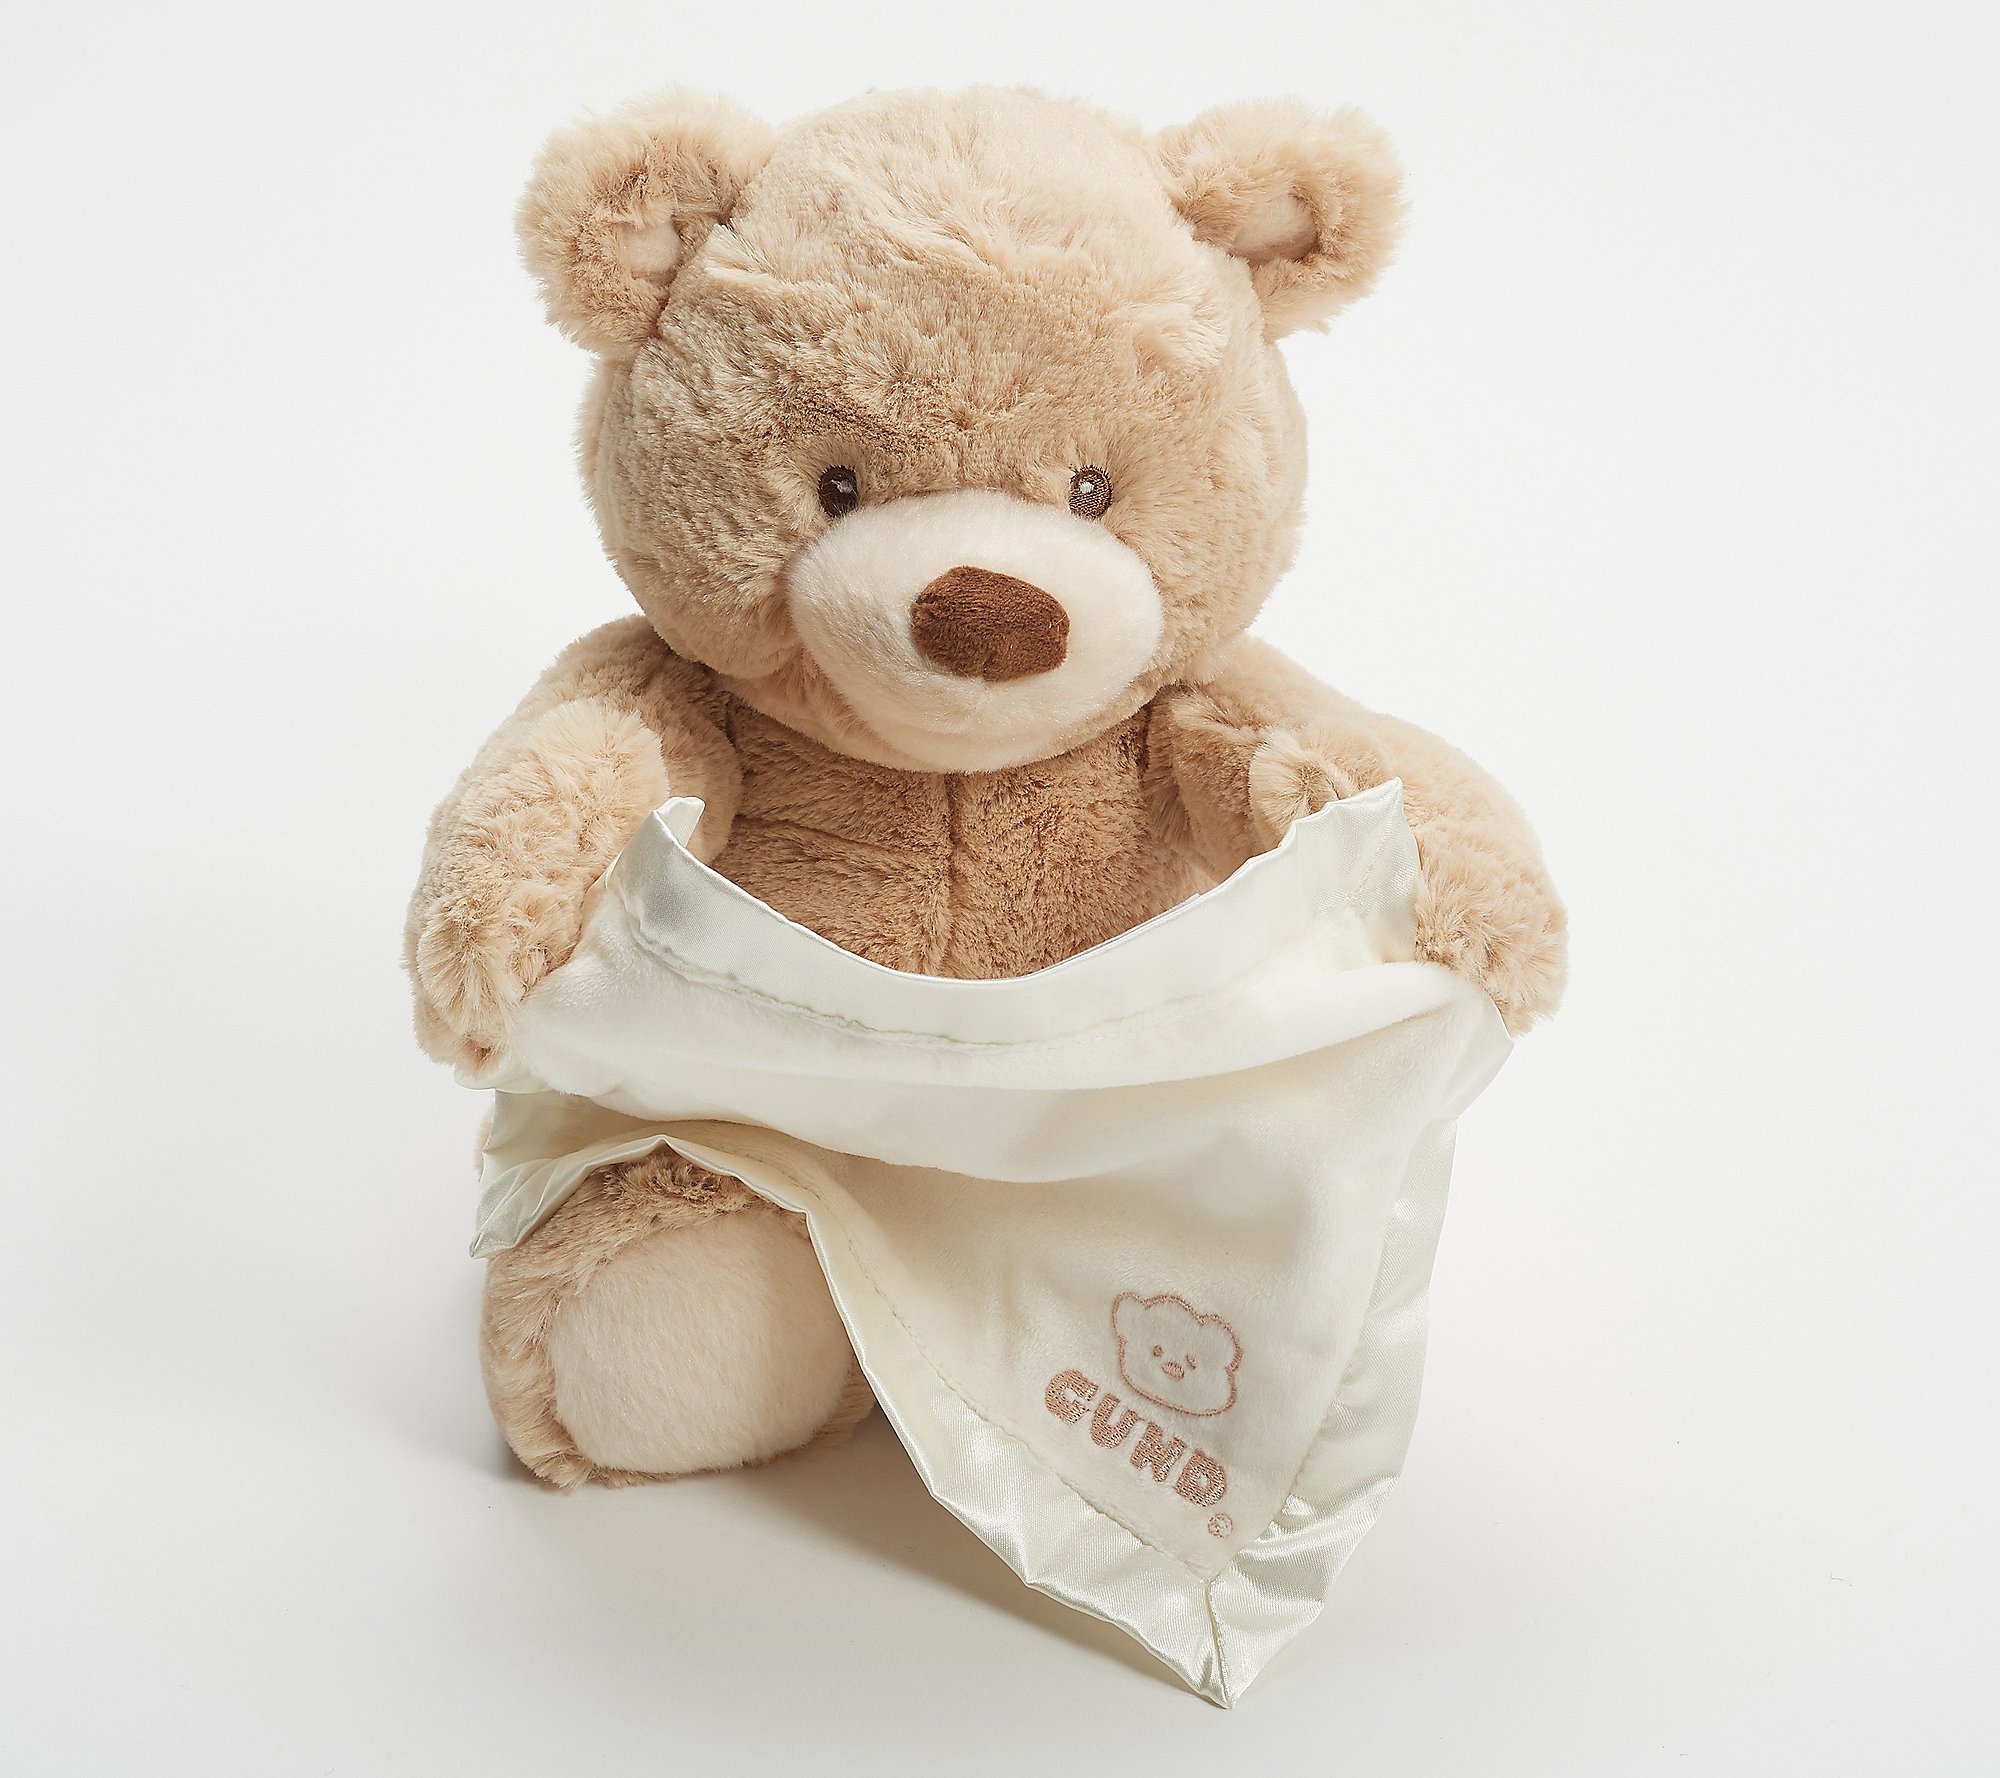 Baby GUND My First Teddy Bear Peek a Boo Animated Stuffed Animal Plush Blue for sale online 